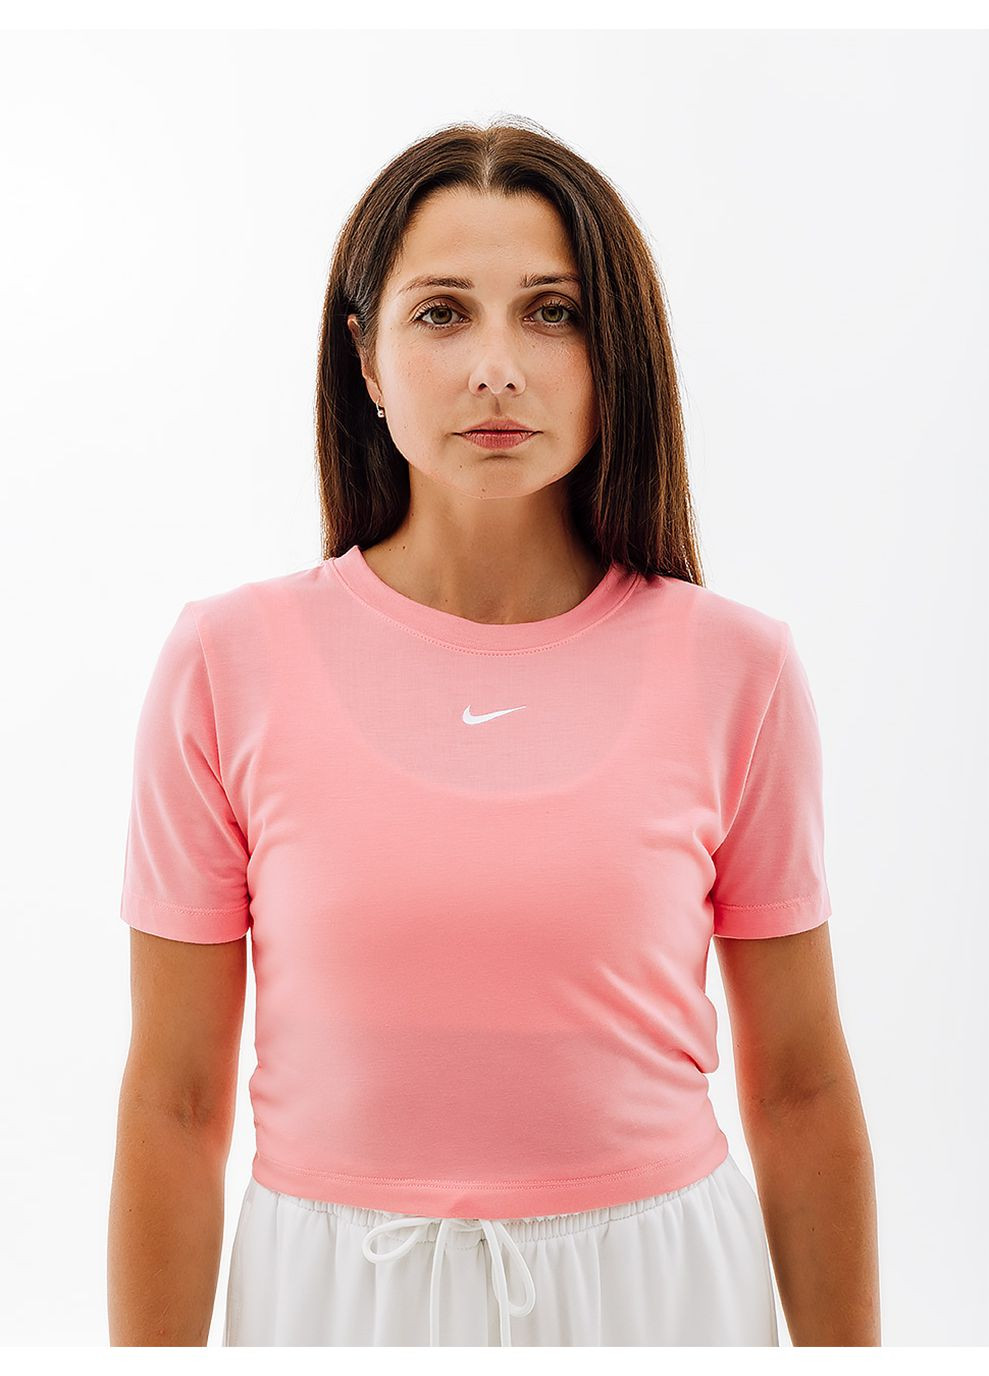 Розовая летняя женская футболка w nsw tee essntl slim crp lbr розовый Nike